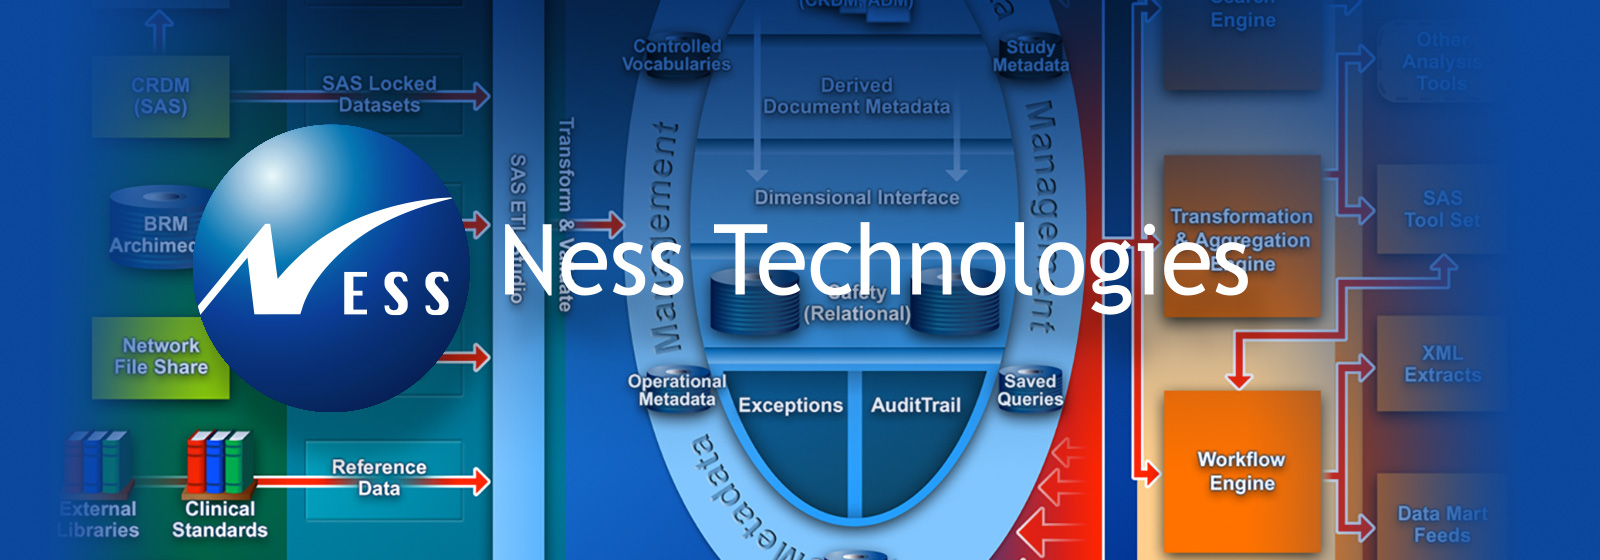 Ness Technologies Portfolio